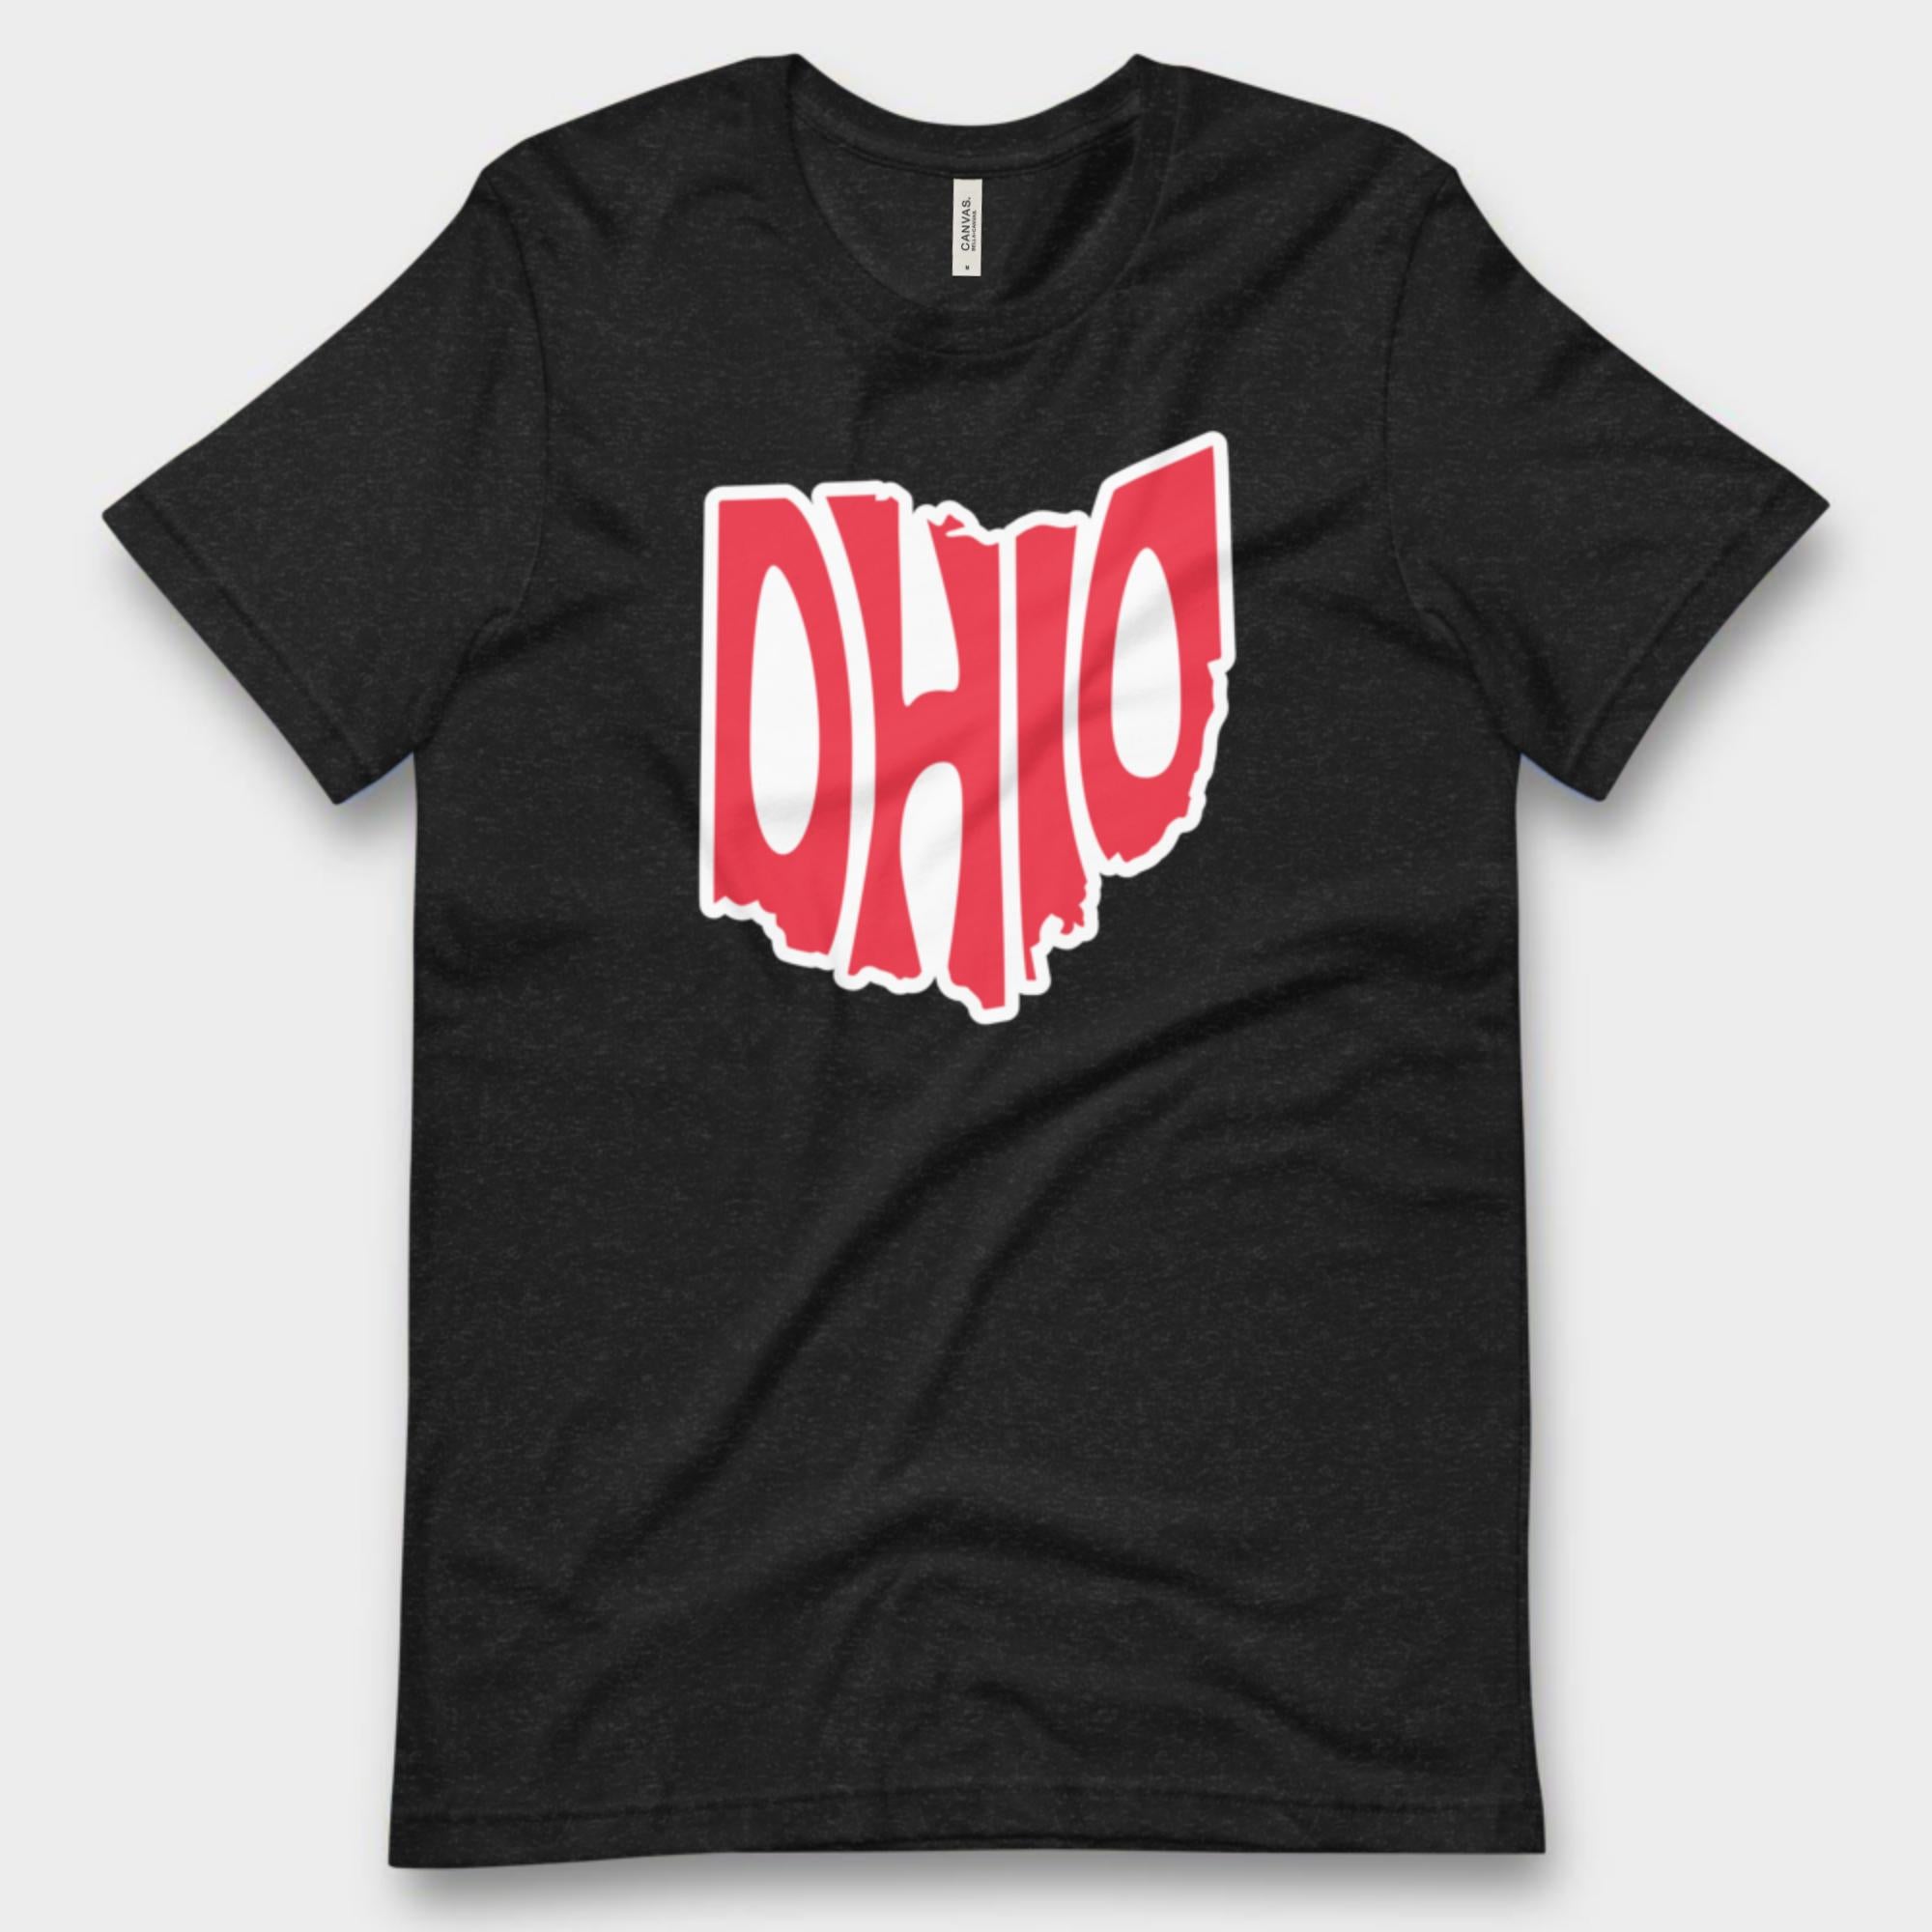 "Ohio" Tee